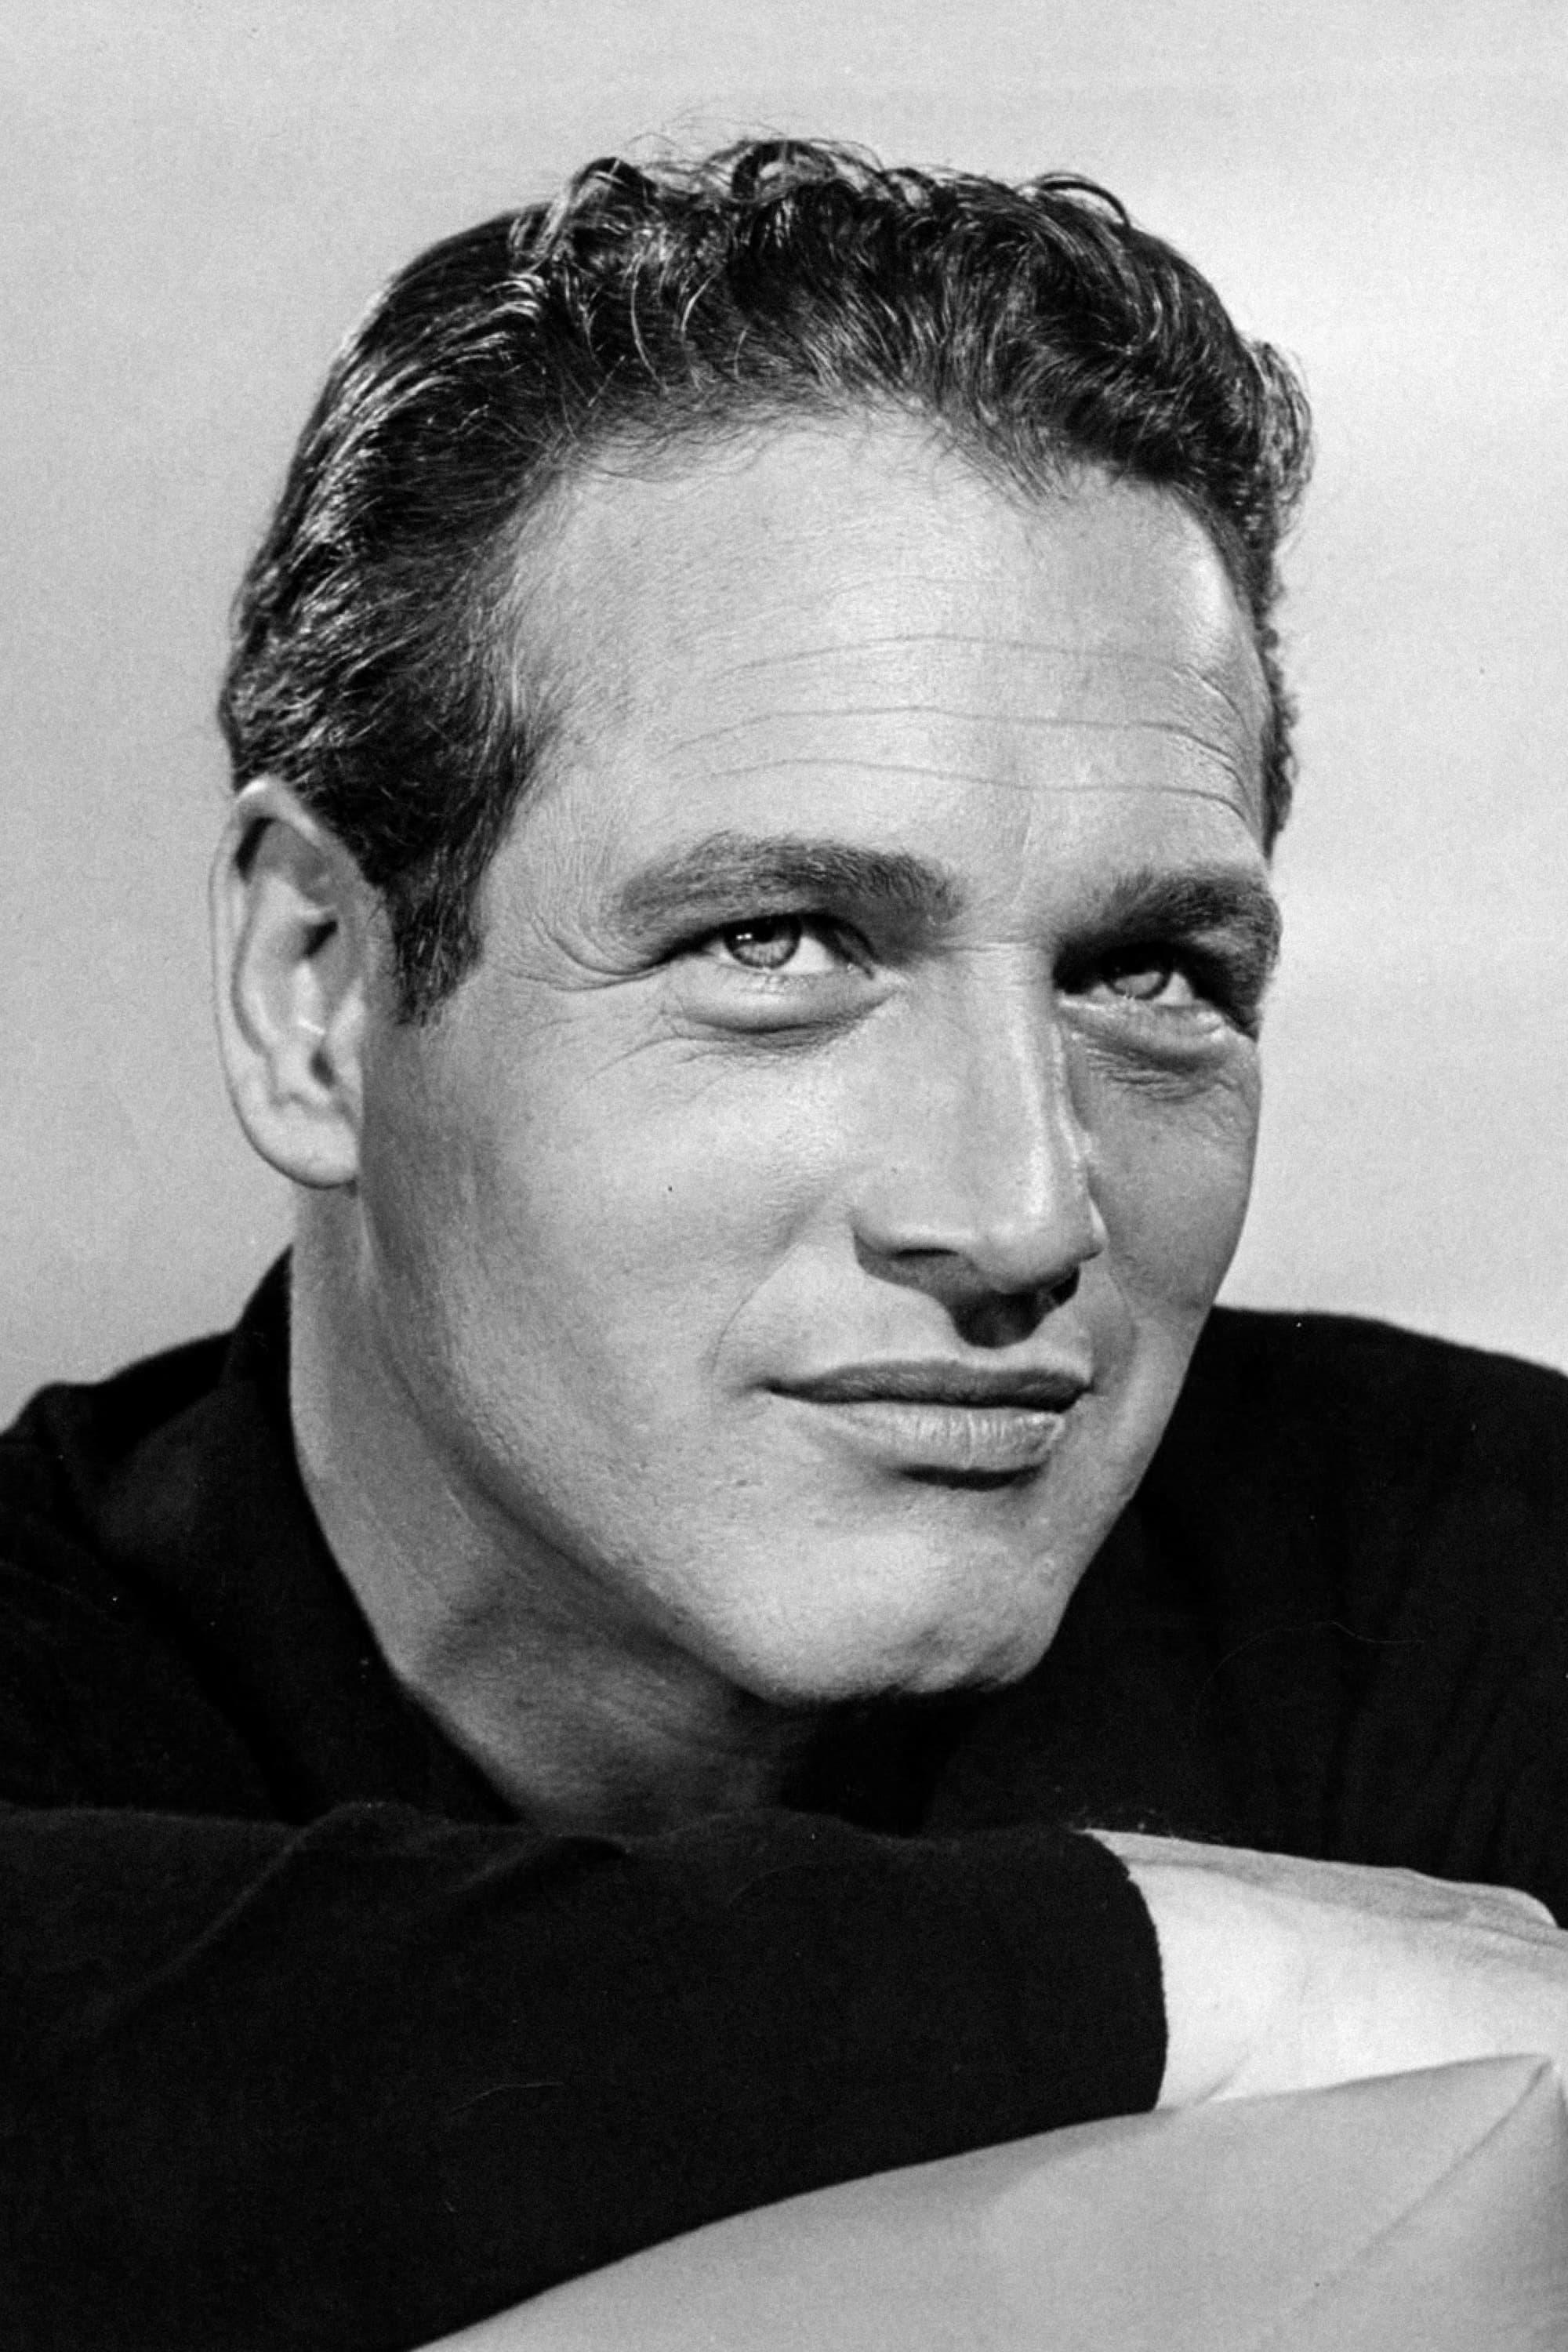 Paul Newman | Capt. Edward W. Hall, Jr.